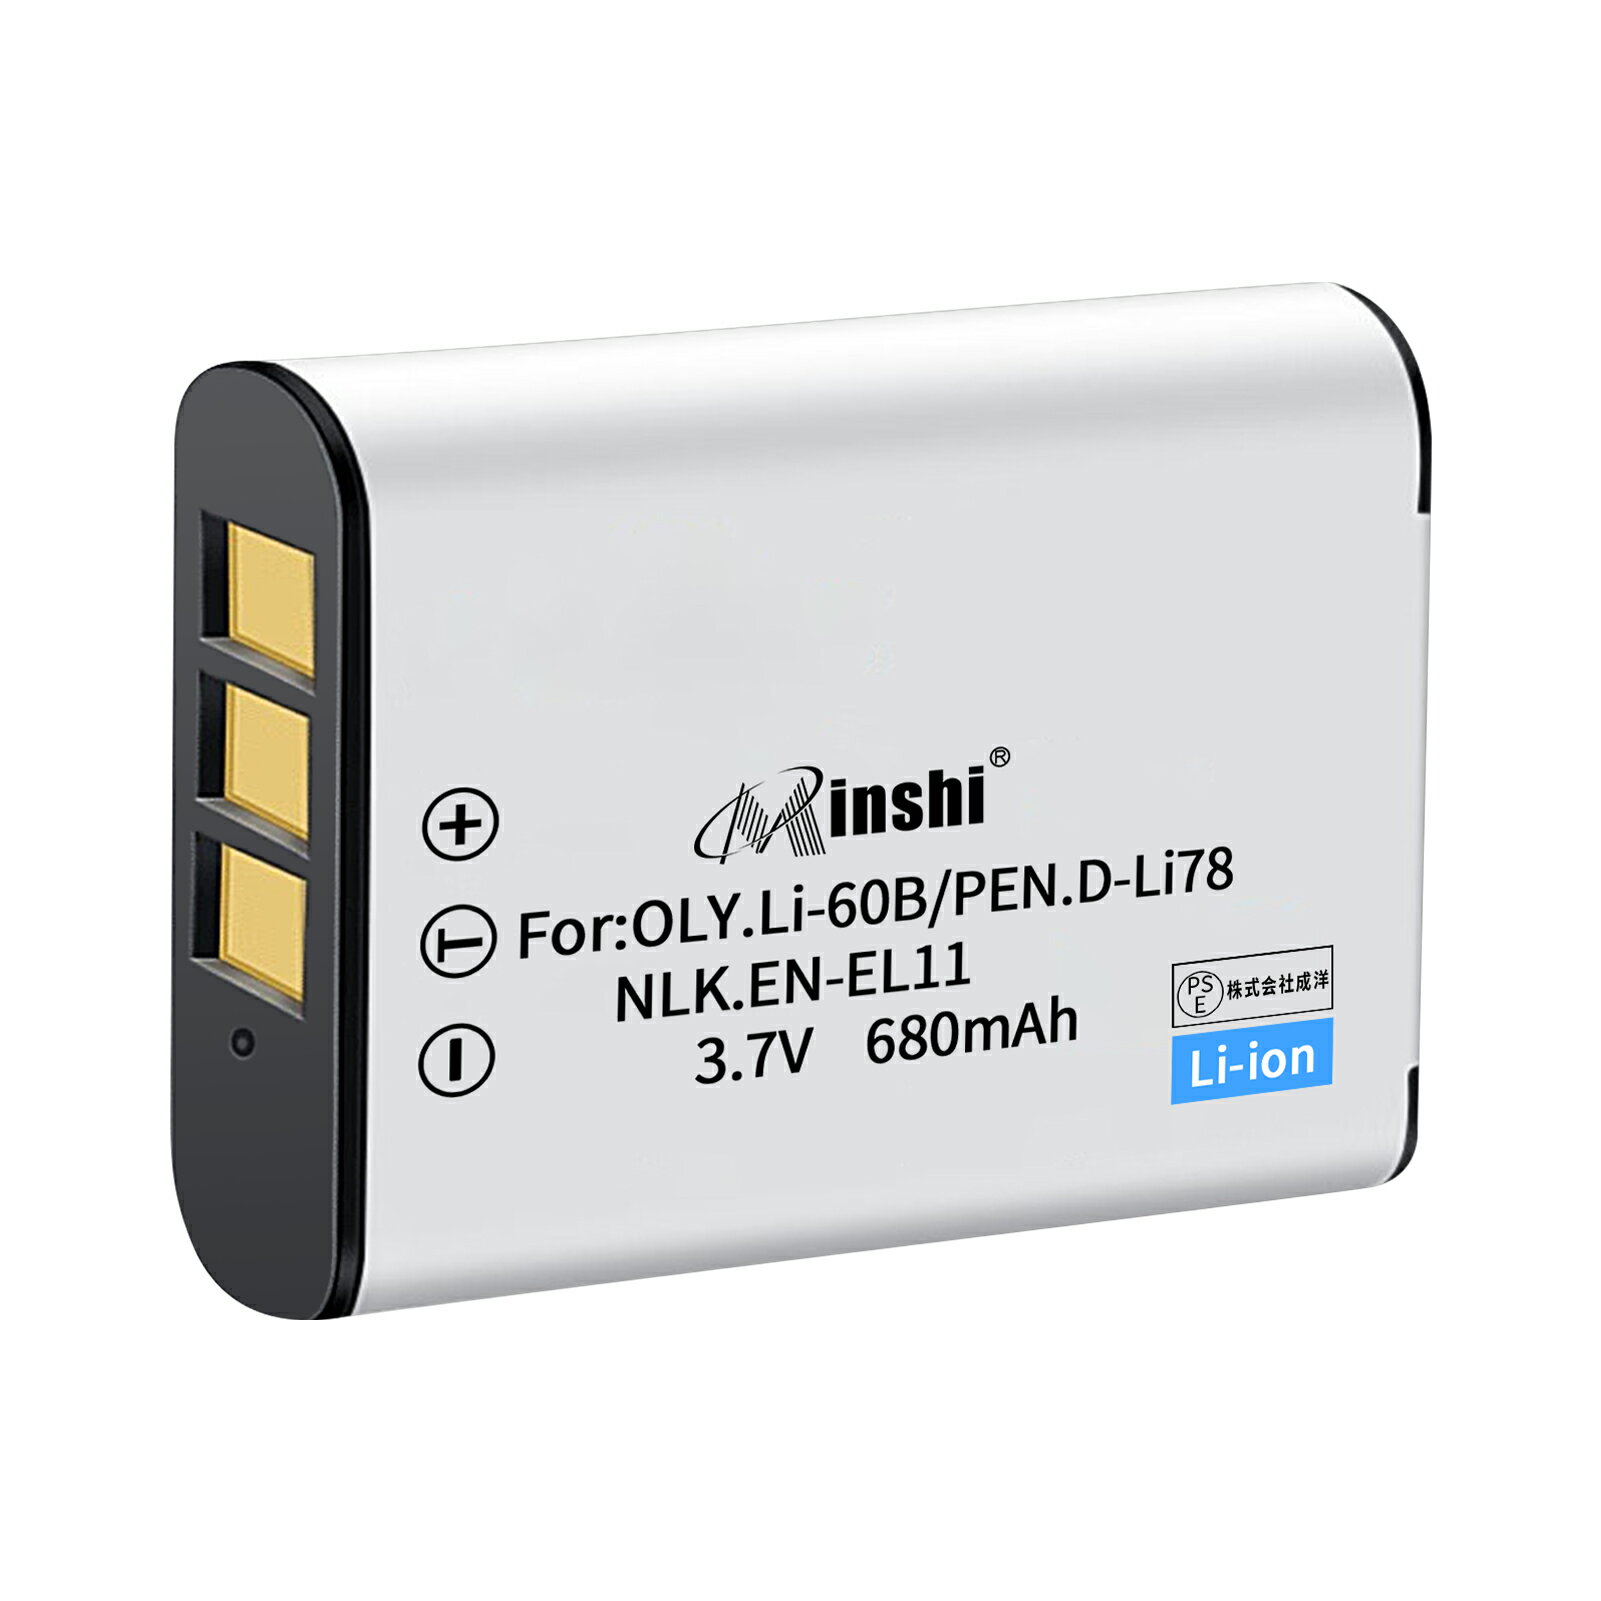 minshi 新品 NIKON Optio W80 互換バッテリー 1200mAh XAB 高品質交換用リチャージブル カメラバッテリー リチウムイオンバッテリー 充電池 PSE認証 1年間保証 オリジナル充電器との互換性がない 予備バッテリー